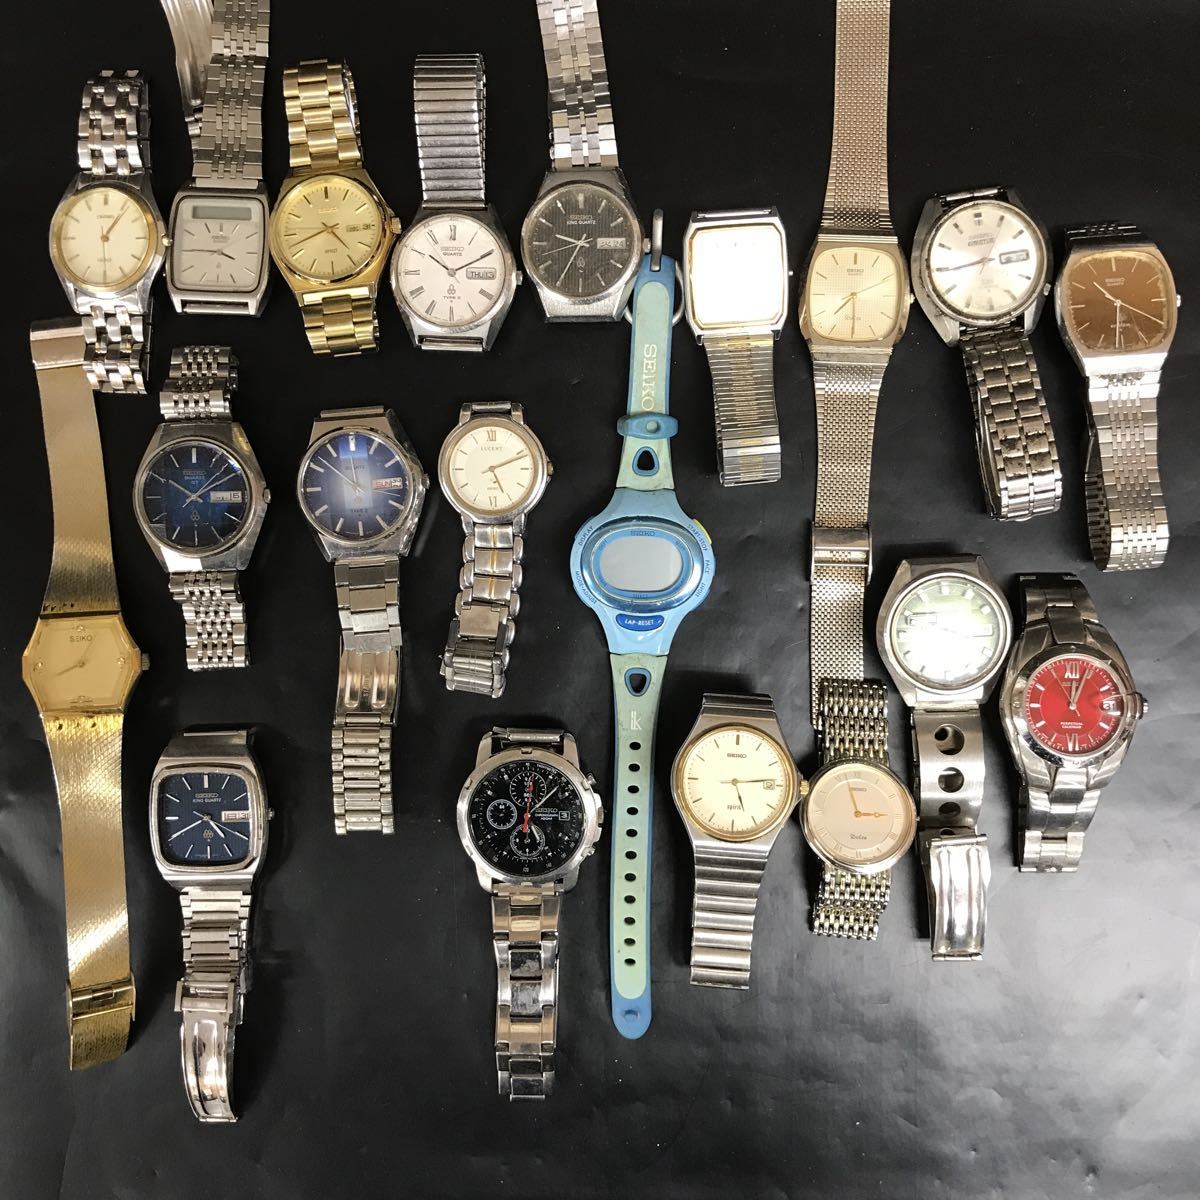 Men's腕時計 ジャンクまとめ売りSEIKO他、 www.sanagustin.ac.id